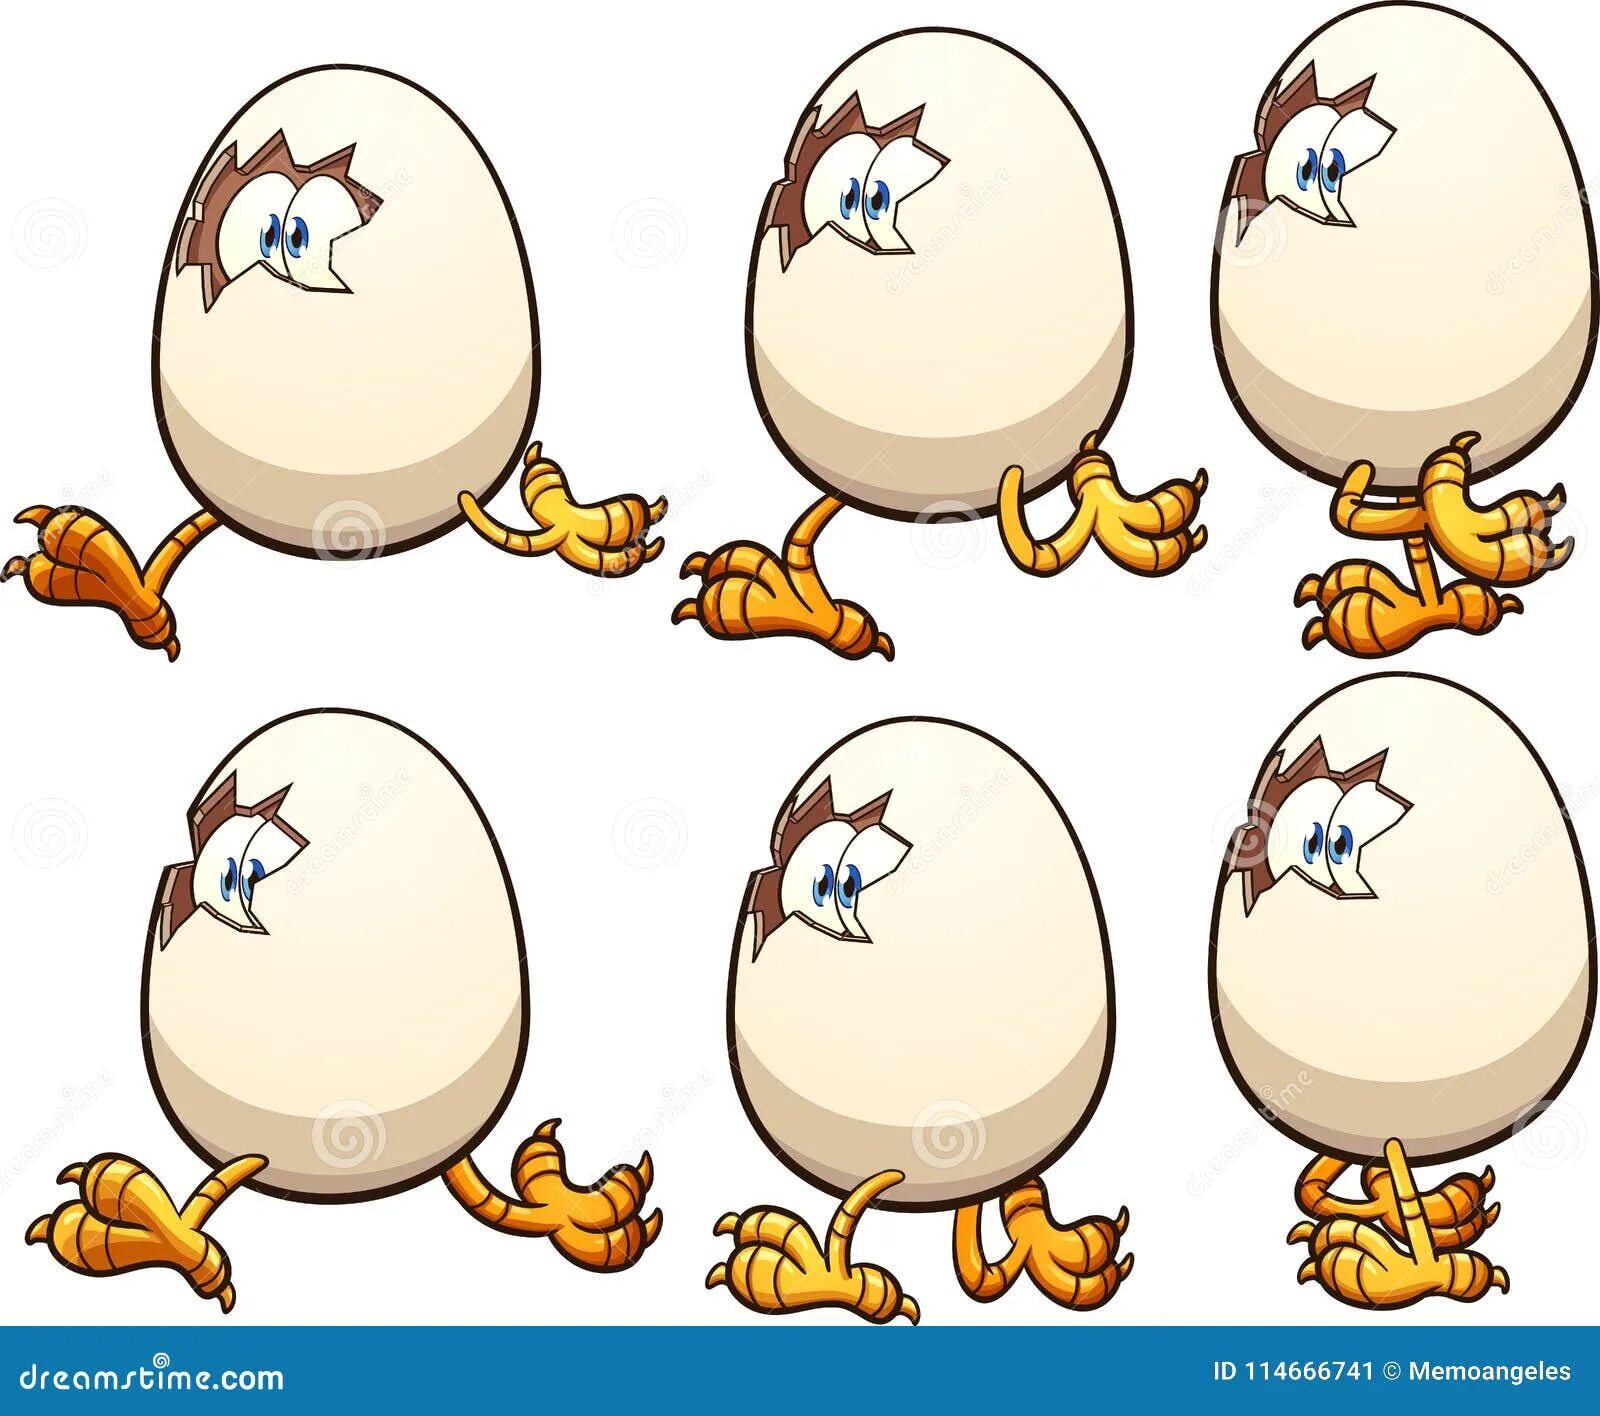 Яйцо мультяшка. Яичко мультяшное. Яйцо спрайт. Яйцо cartoon.